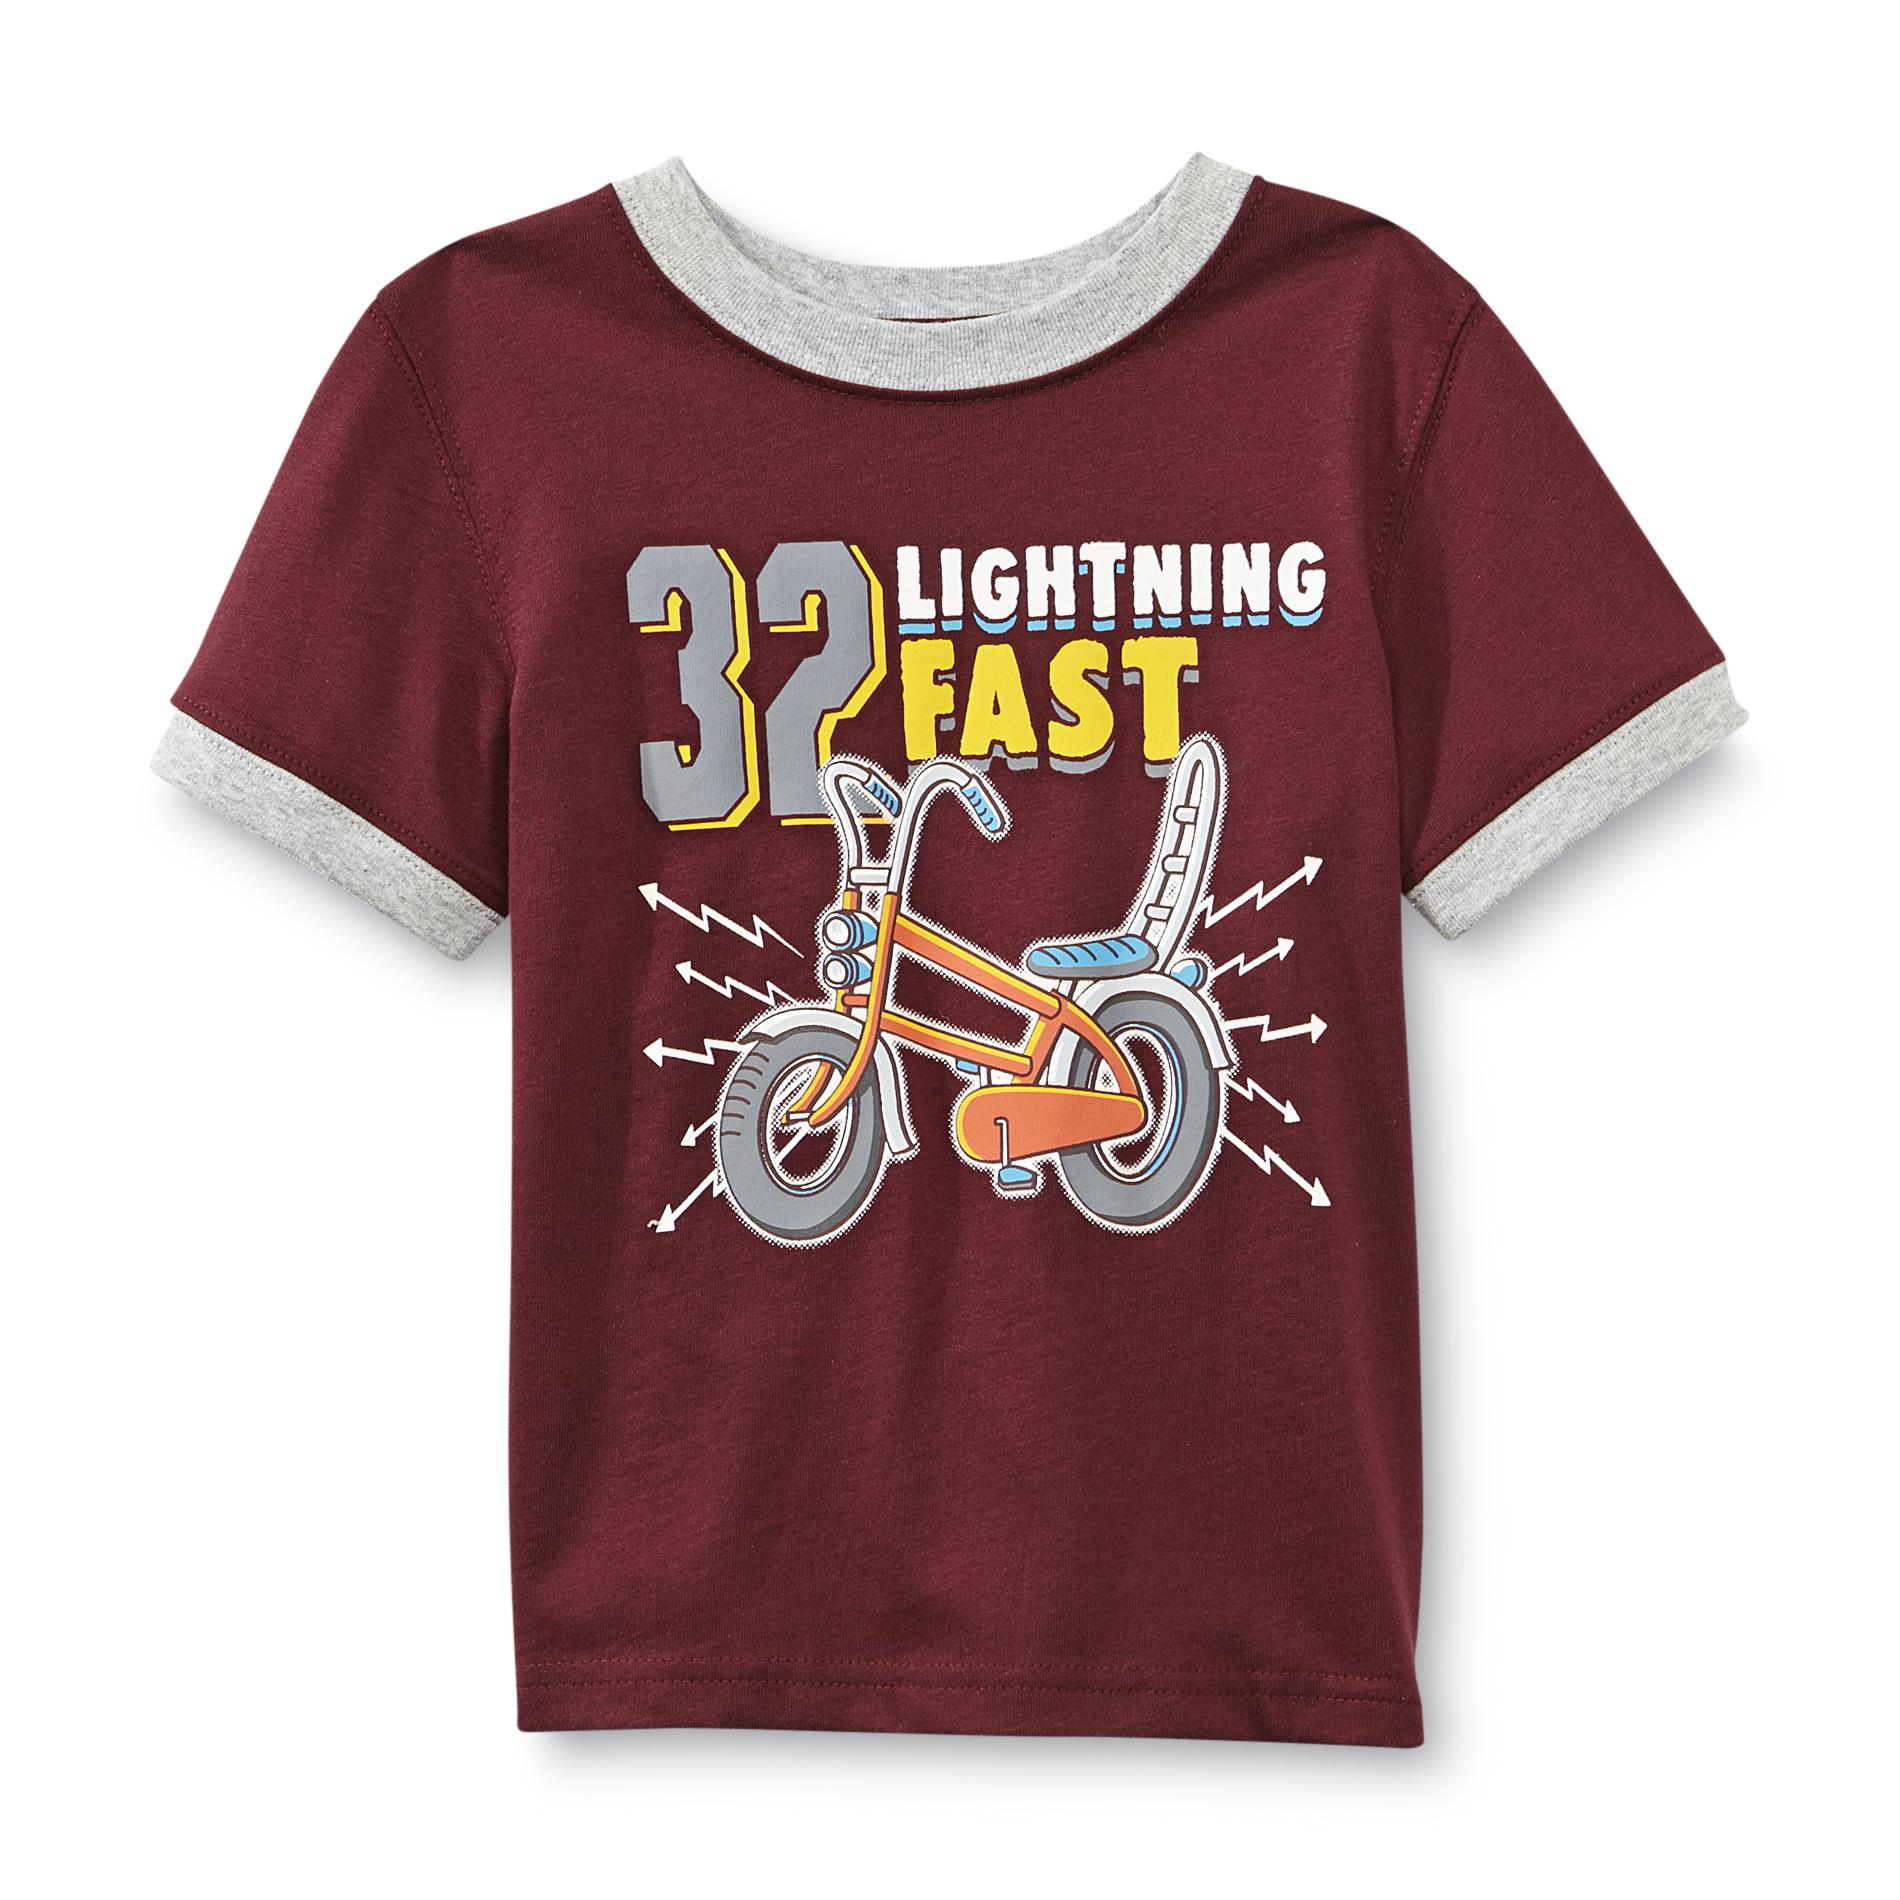 Toughskins Infant & Toddler Boy's Ringer Graphic T-Shirt - Lightning Fast